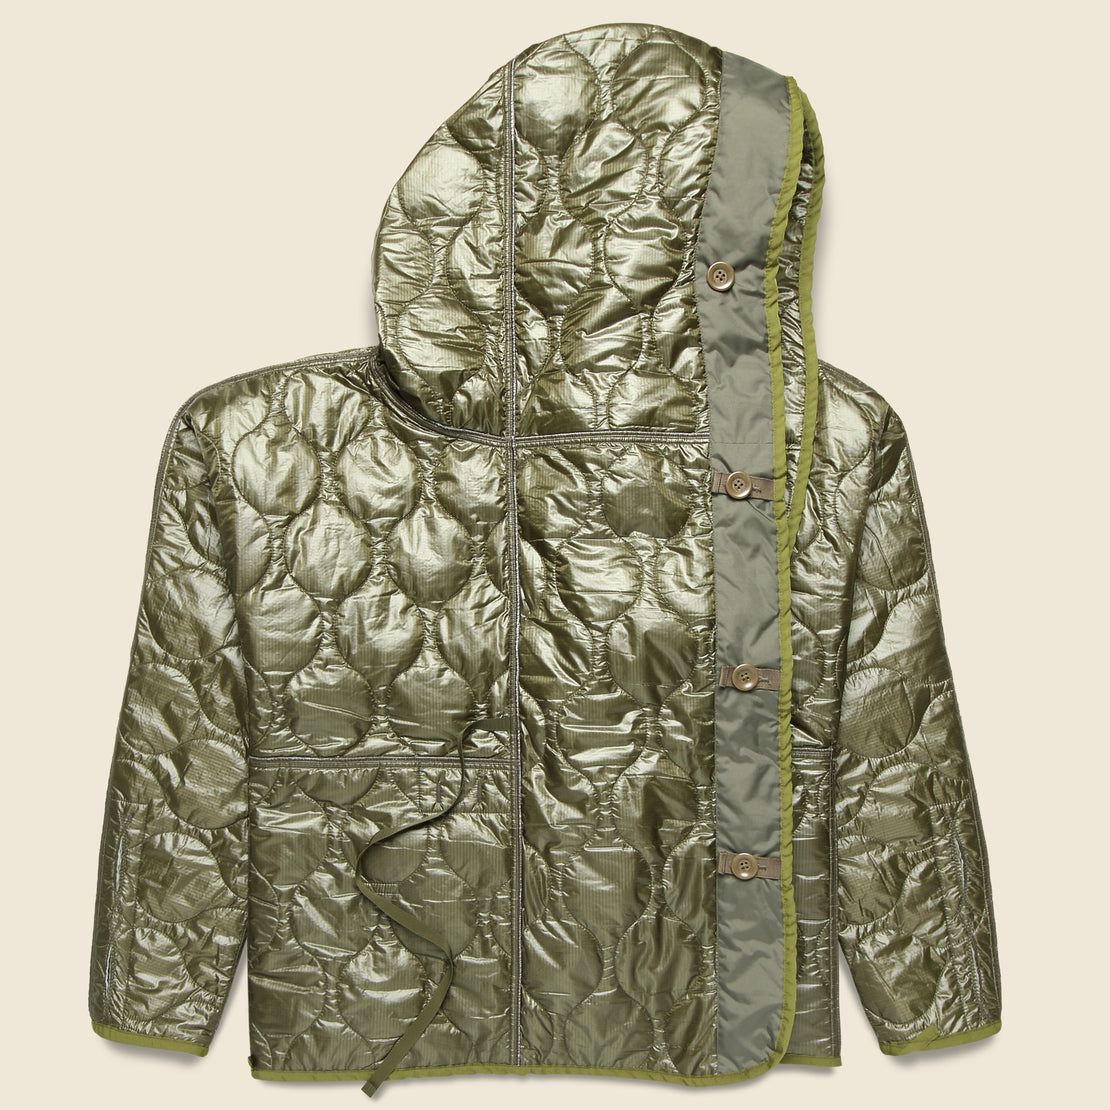 Nylon Quilting Lining RING Coat - Khaki - Kapital - STAG Provisions - Outerwear - Coat / Jacket